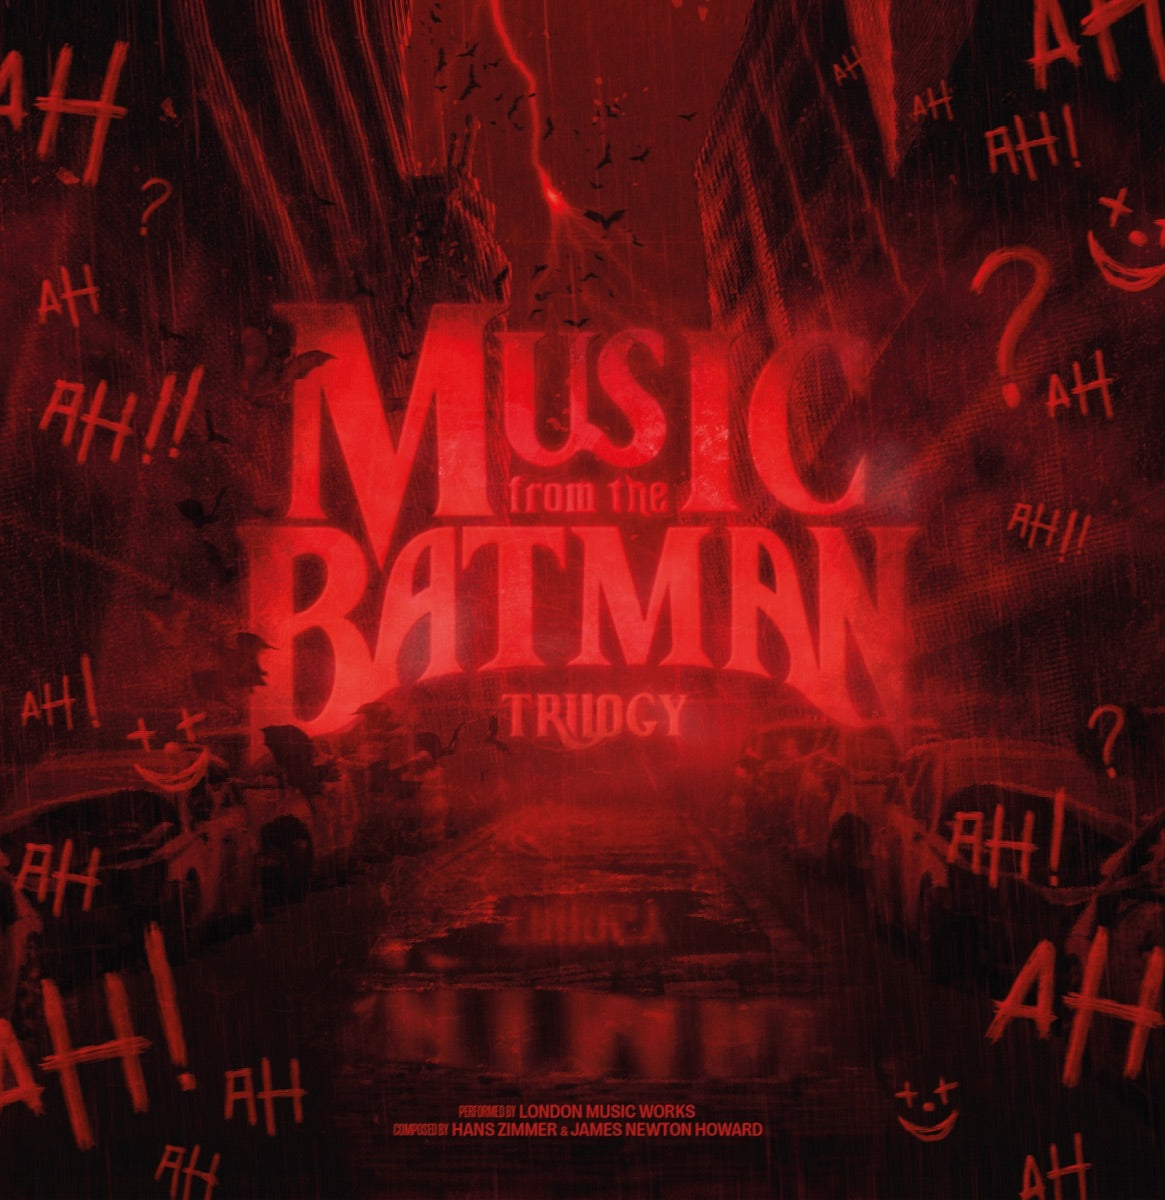 Hans Zimmer, James Newton Howard, London Music Works - Music from The Batman Trilogy: Vinyl 2LP